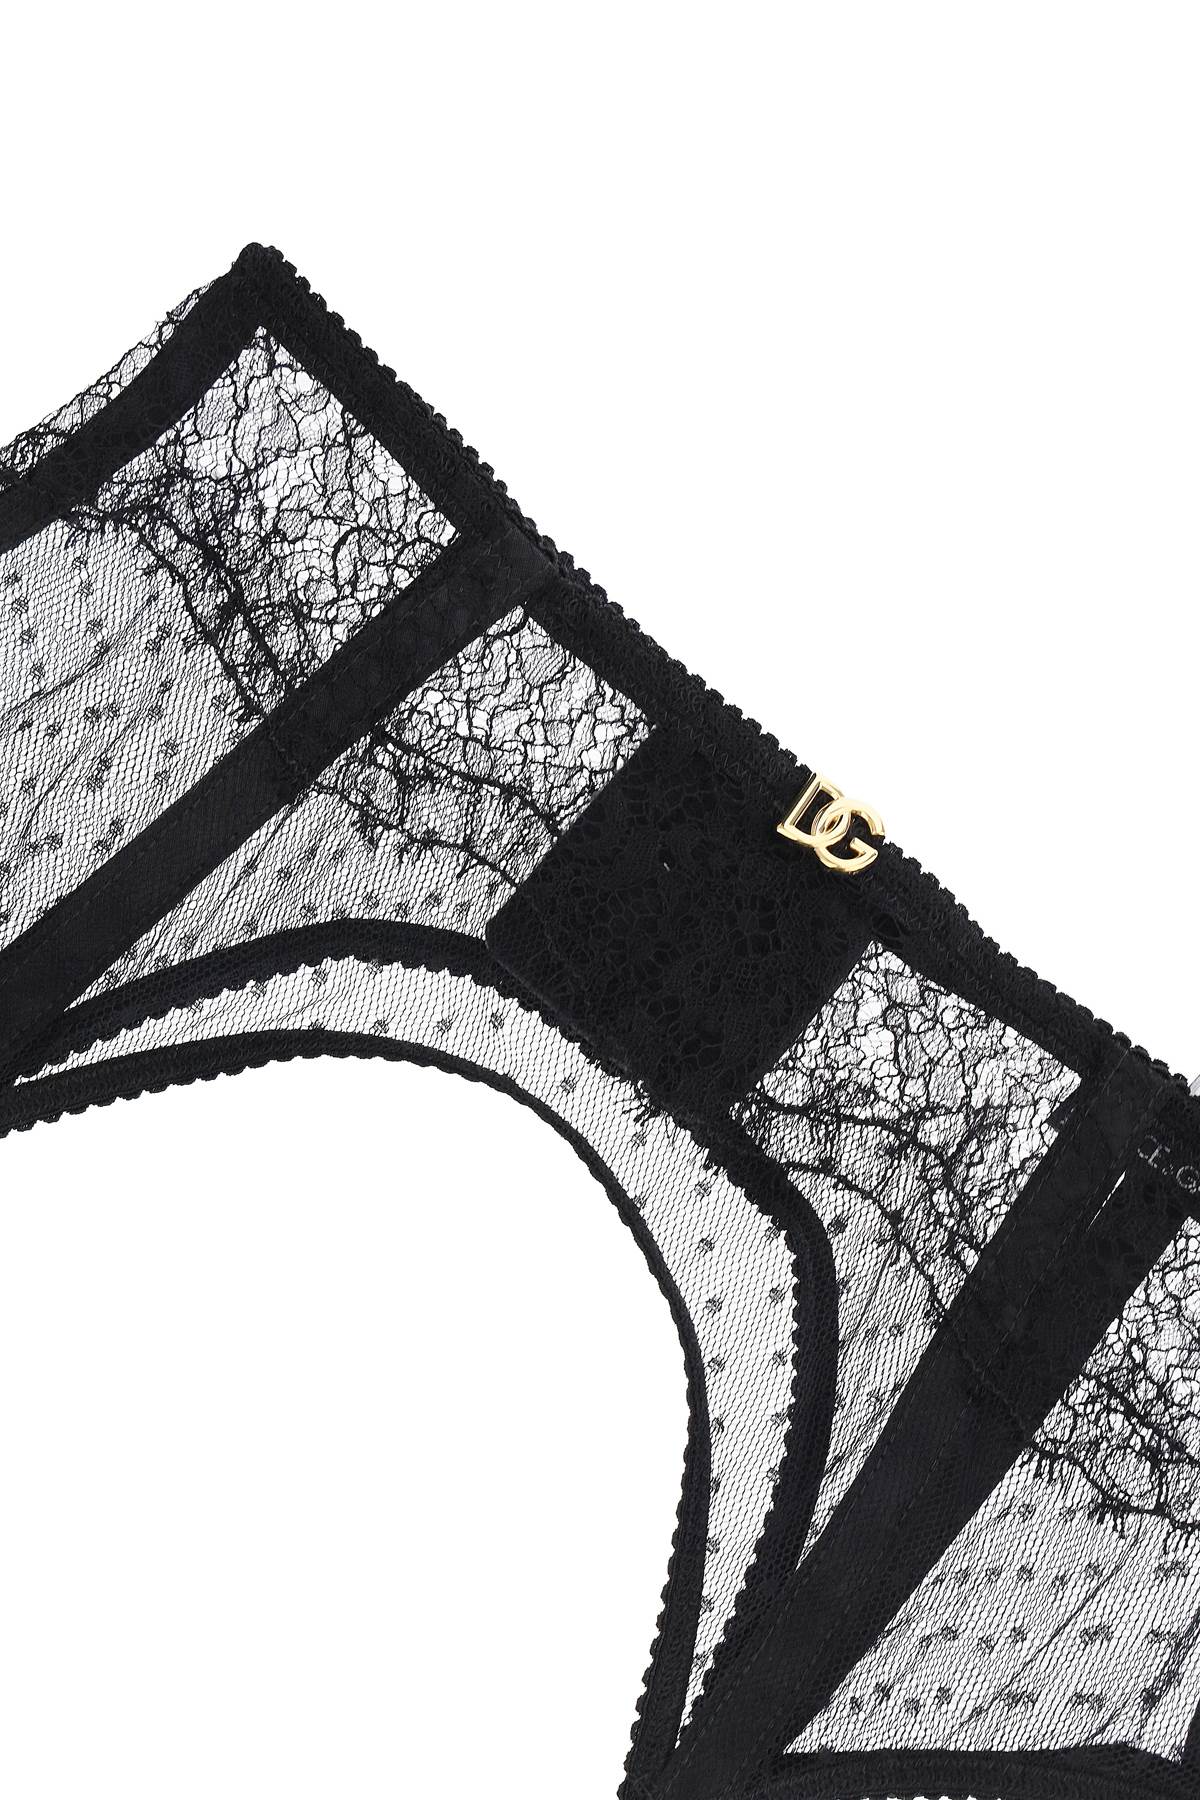 Dolce & Gabbana Lace Garter Belt With Logo   Black